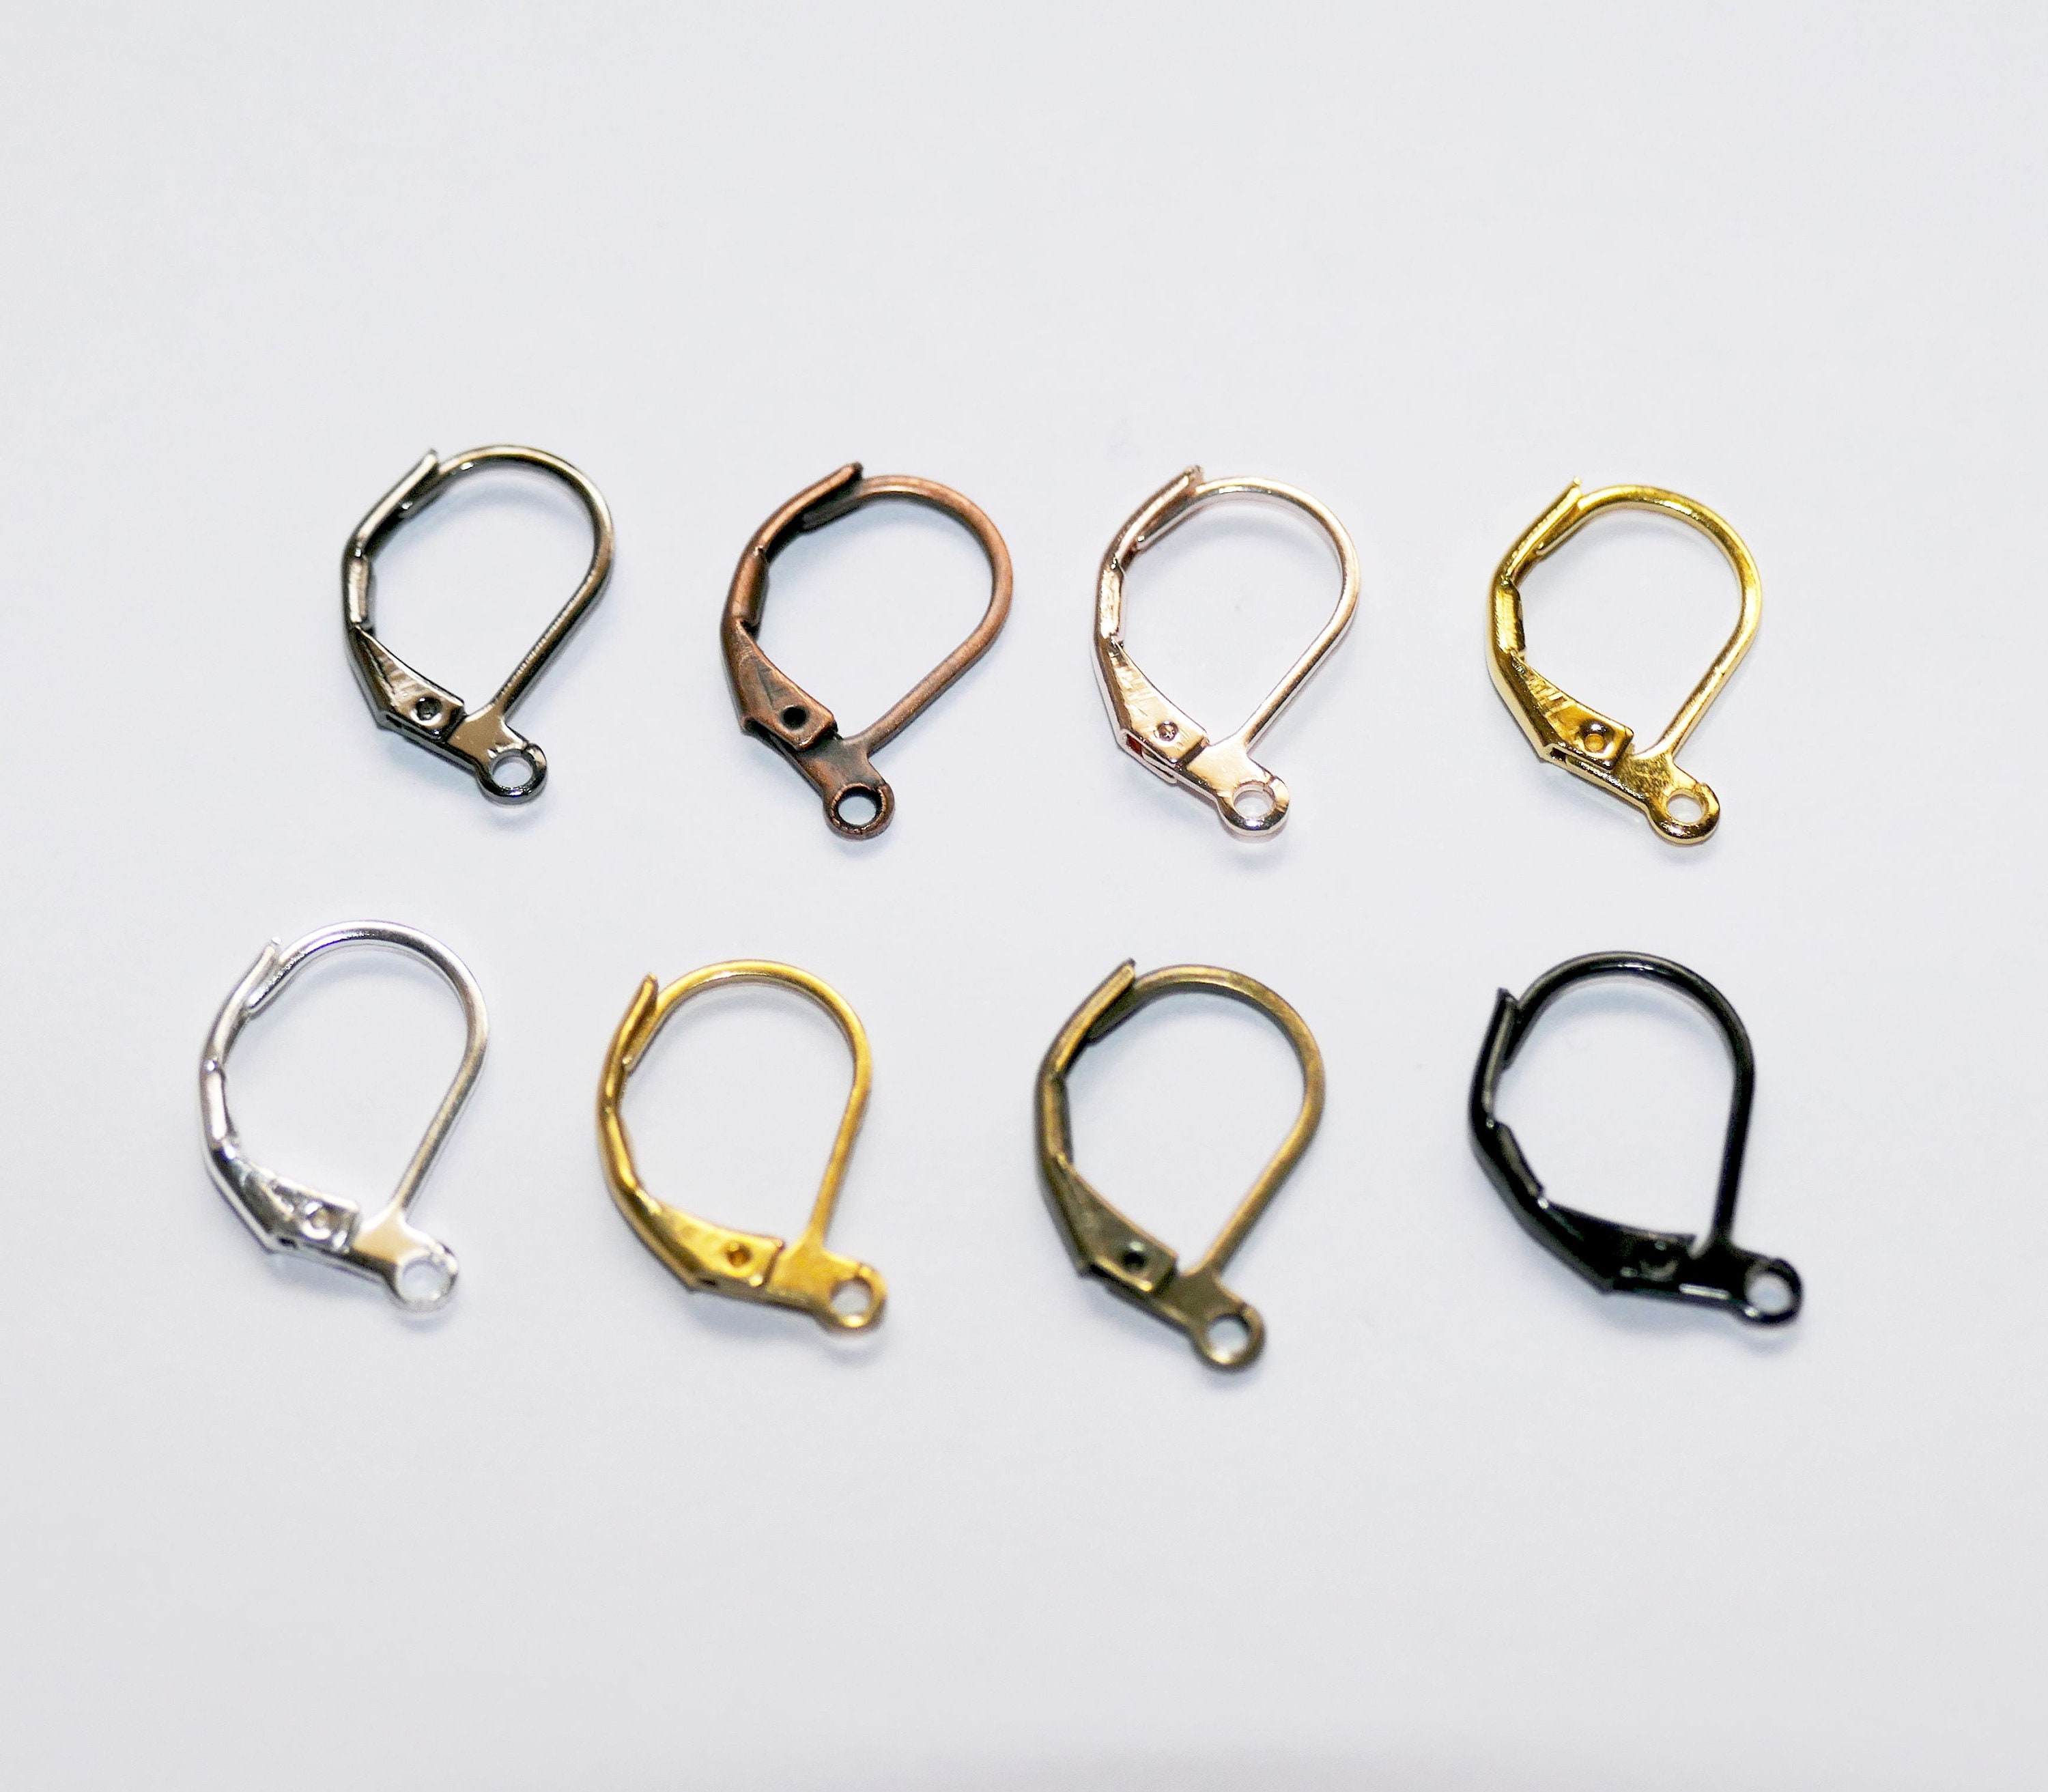 925 Sterling Silver Euro Wire, Lever-back Earring Hook With Loop, Leverback Earrings  Hook Findings, Solid Silver Earrings Making, EF1100 